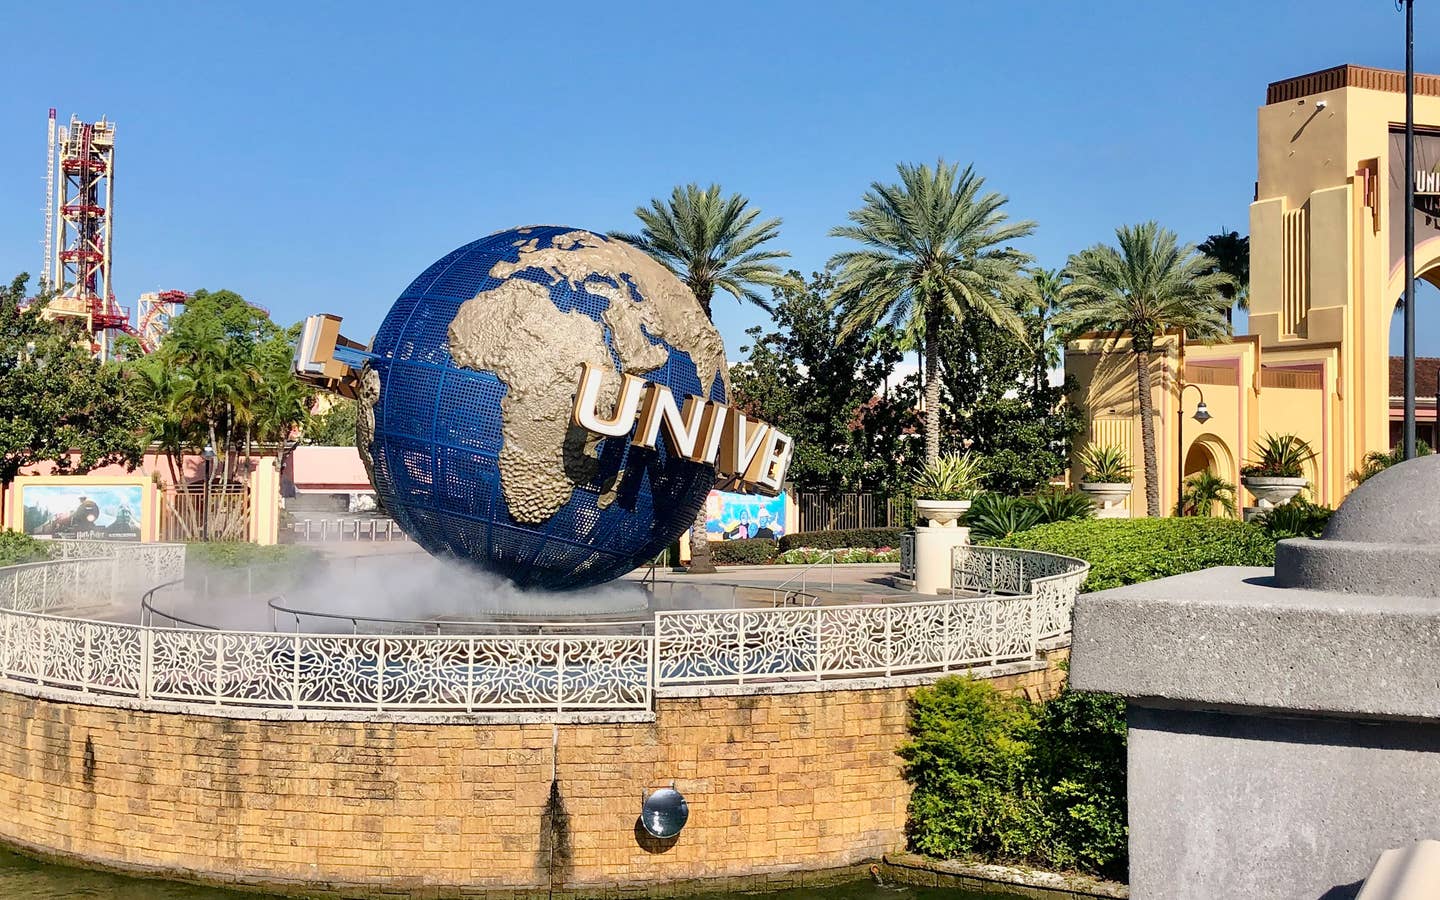 Universal Studio park entrance featuring the Universal Globe (left).